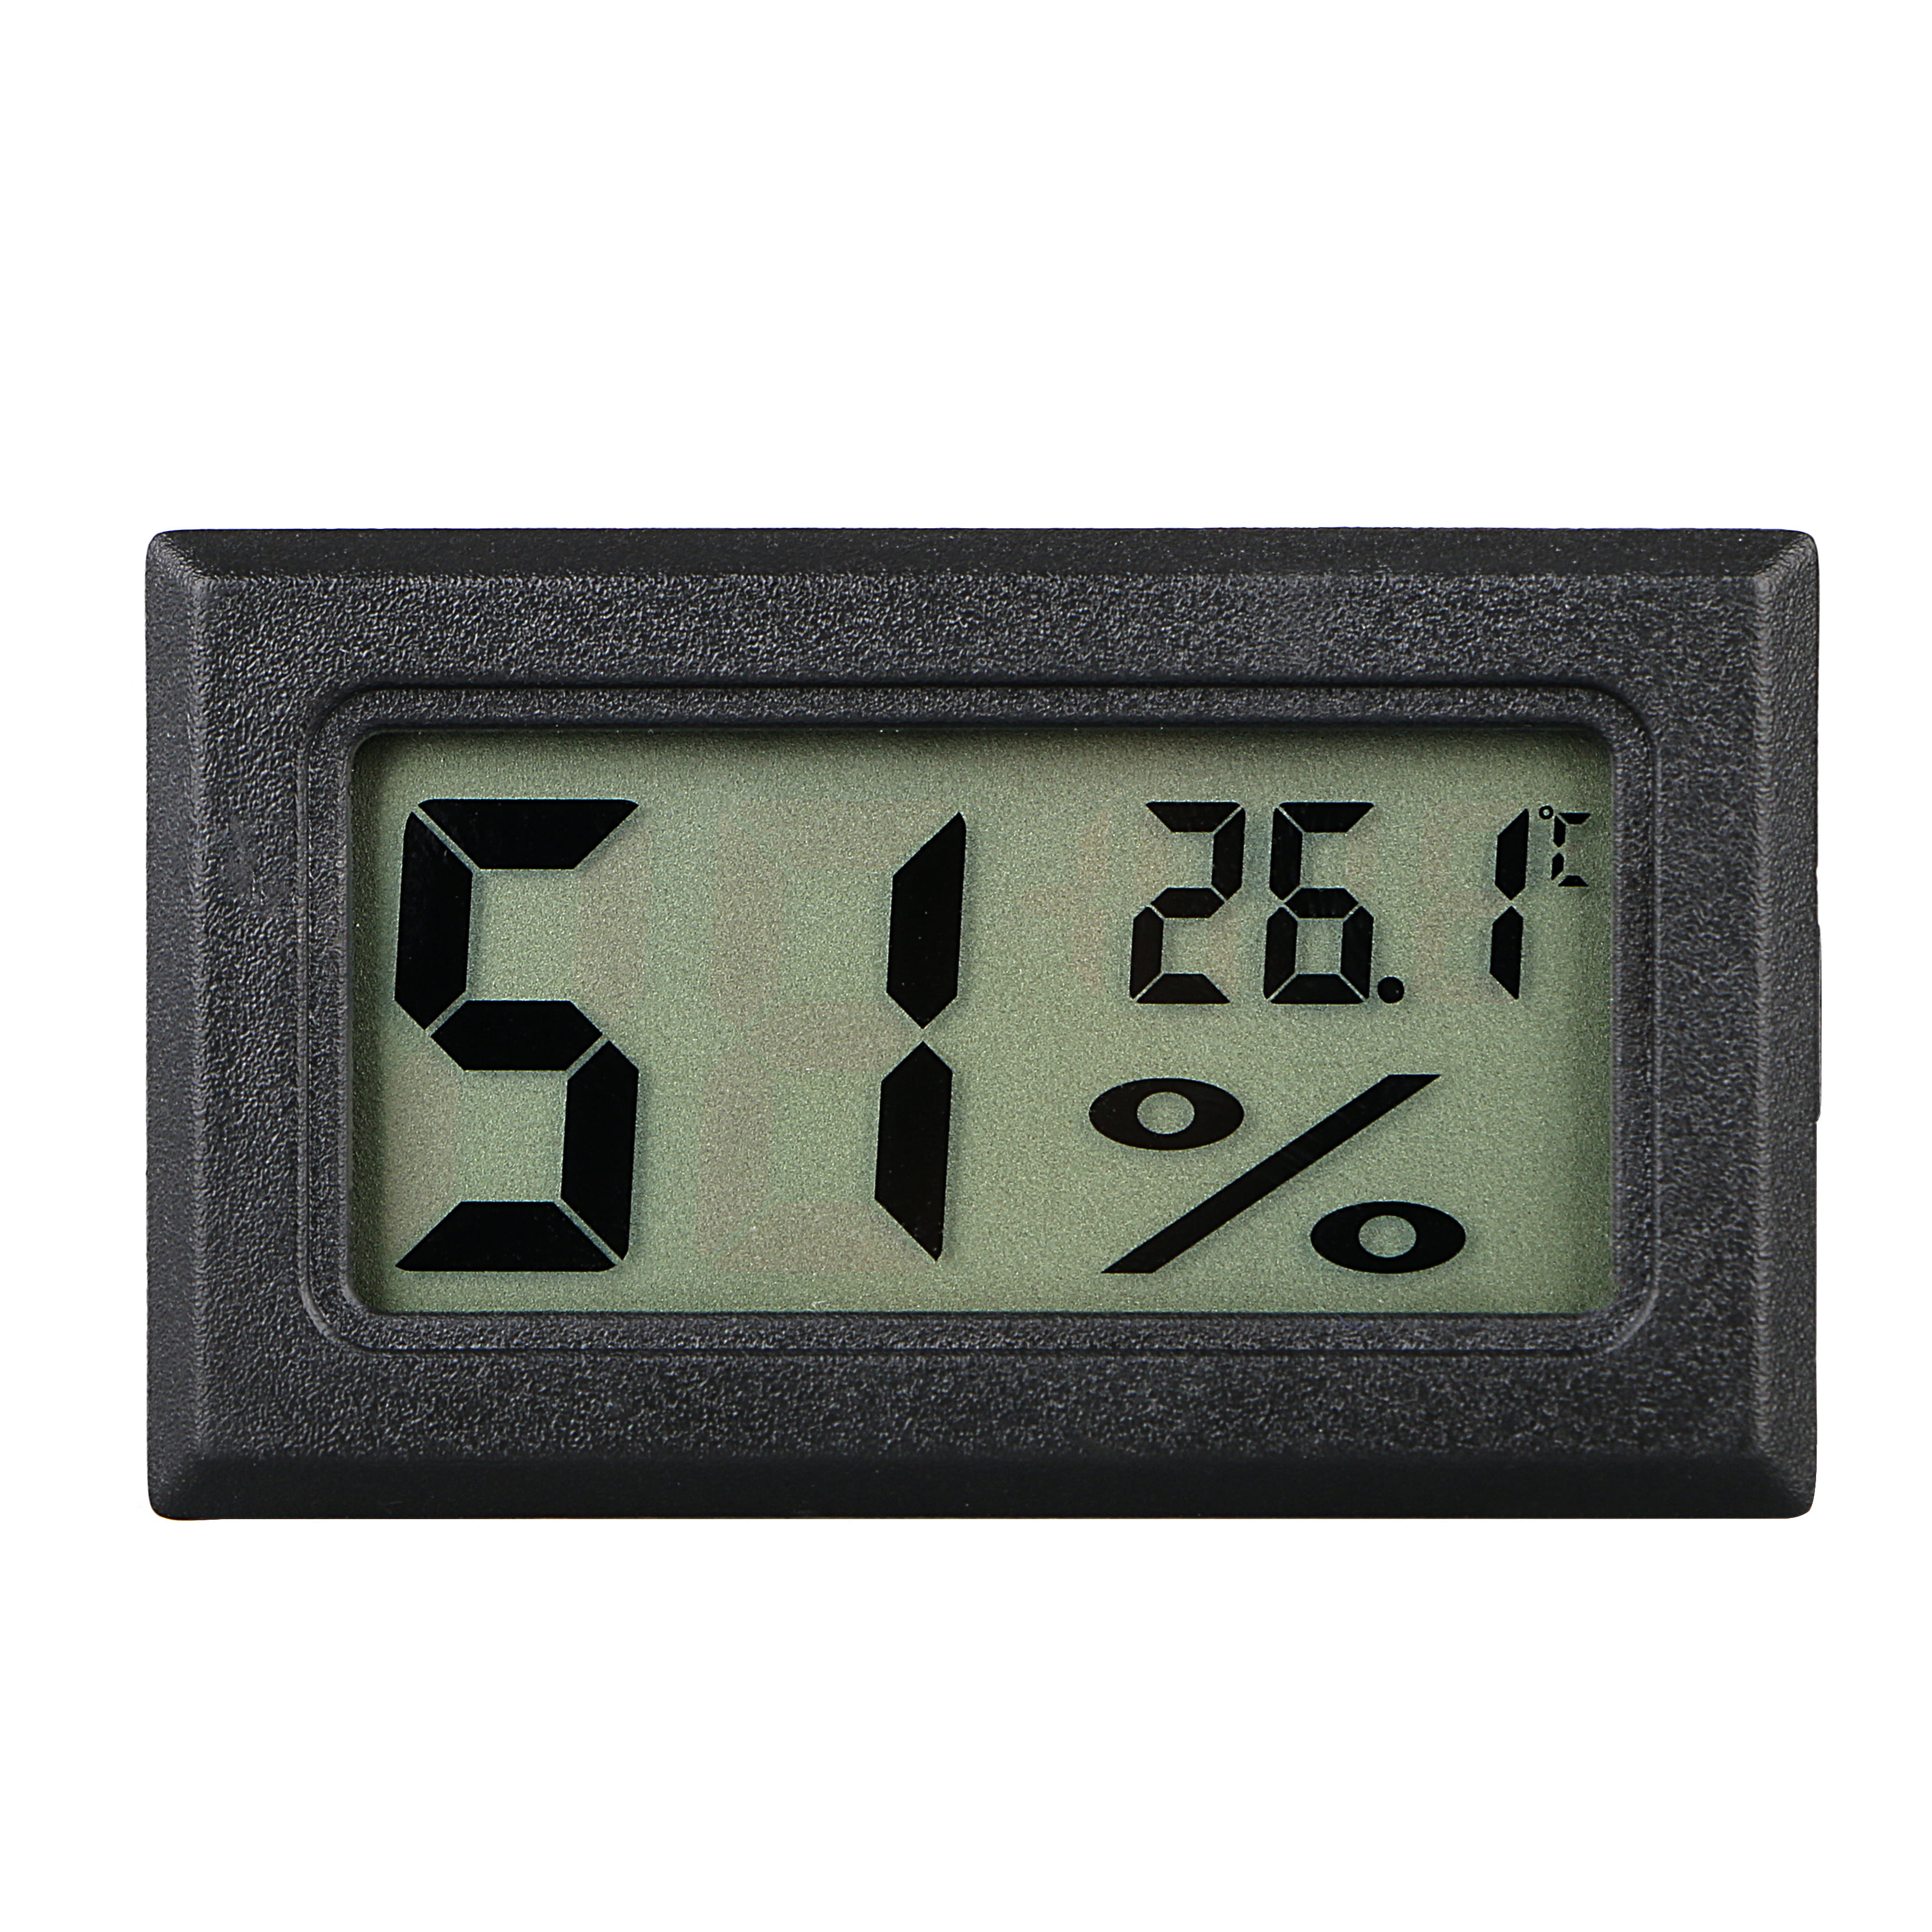 LCD Digital Indoor Temperature Humidity Meter Thermomètre Hygromètre